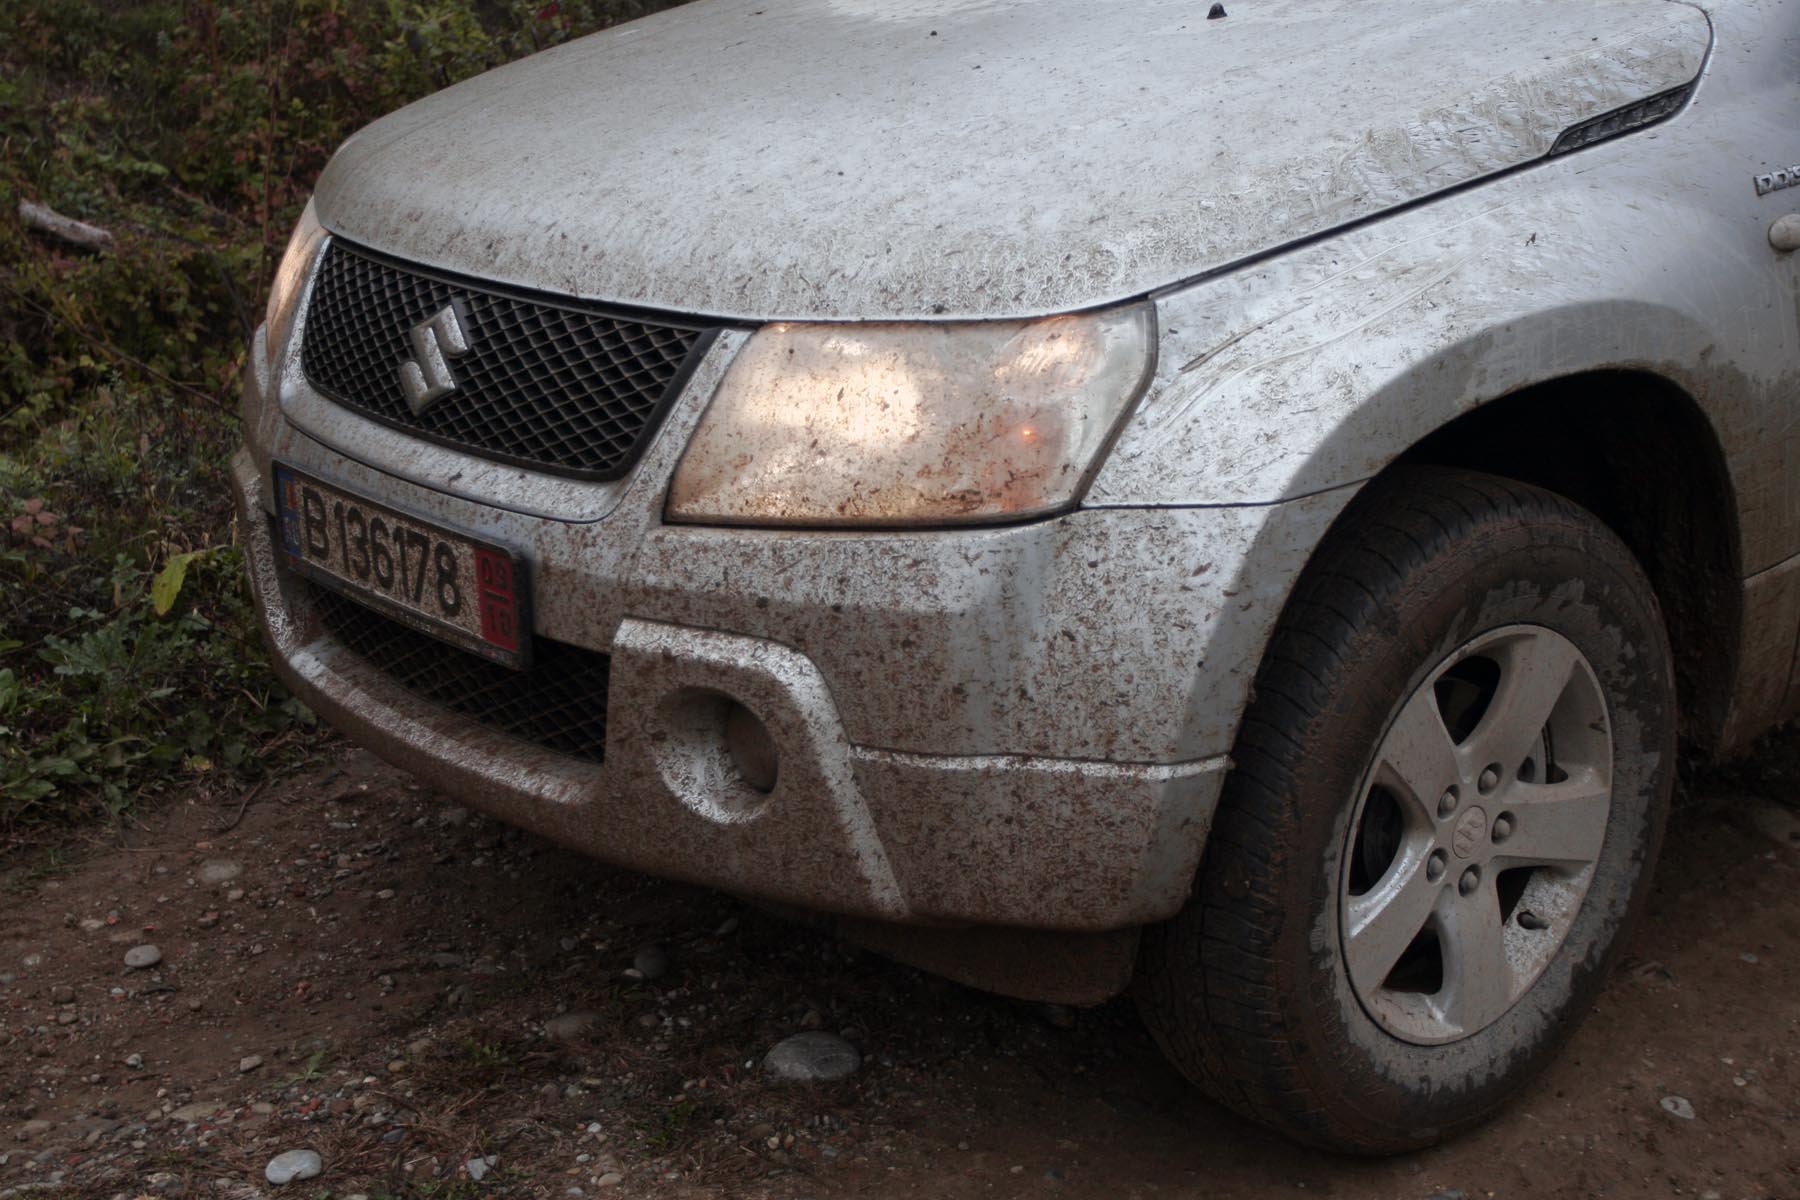 Suzuki Grand Vitara loves mud!